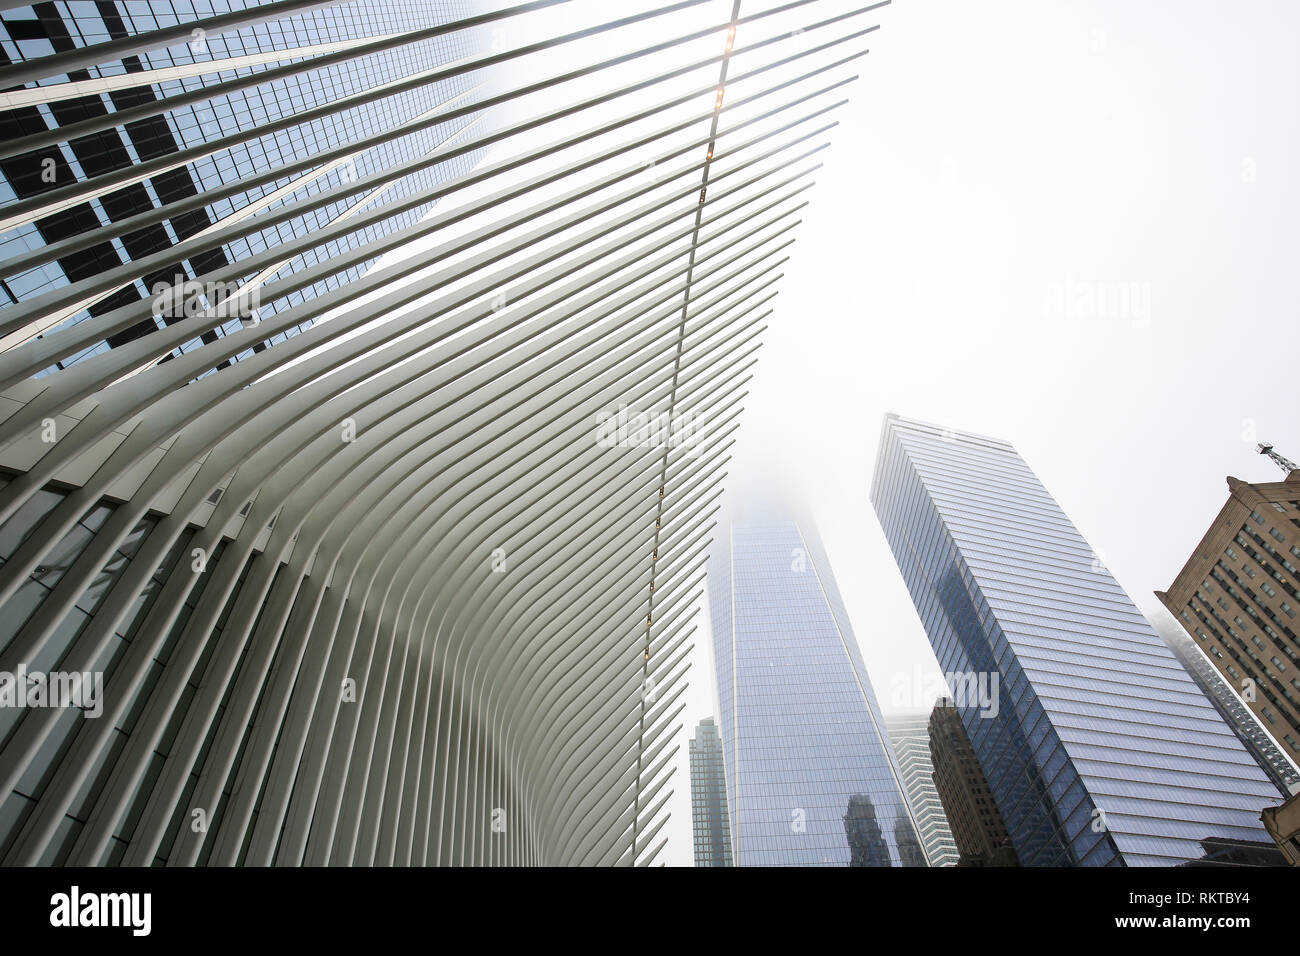 La città di New York New York, Vereinigte Staaten von Amerika - Freedom Tower am Oculus, World Trade Center, WTC, Manhattan STATI UNITI D'AMERICA. Foto Stock